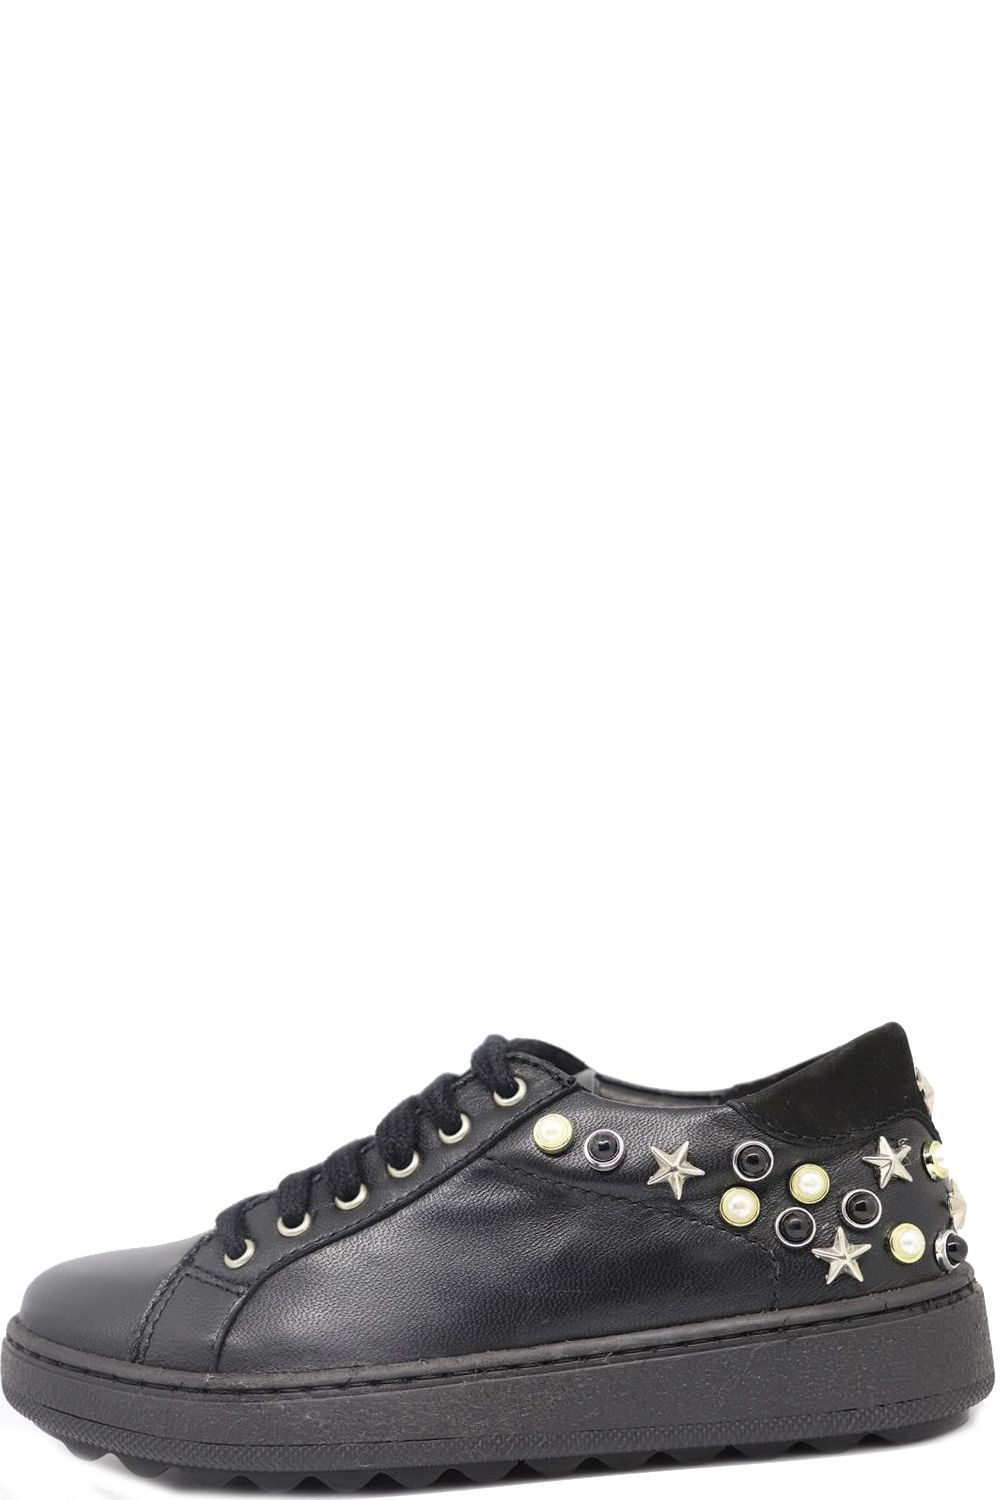 Ботинки Holala, размер 37, цвет черный HS0035L0002J016 - фото 1